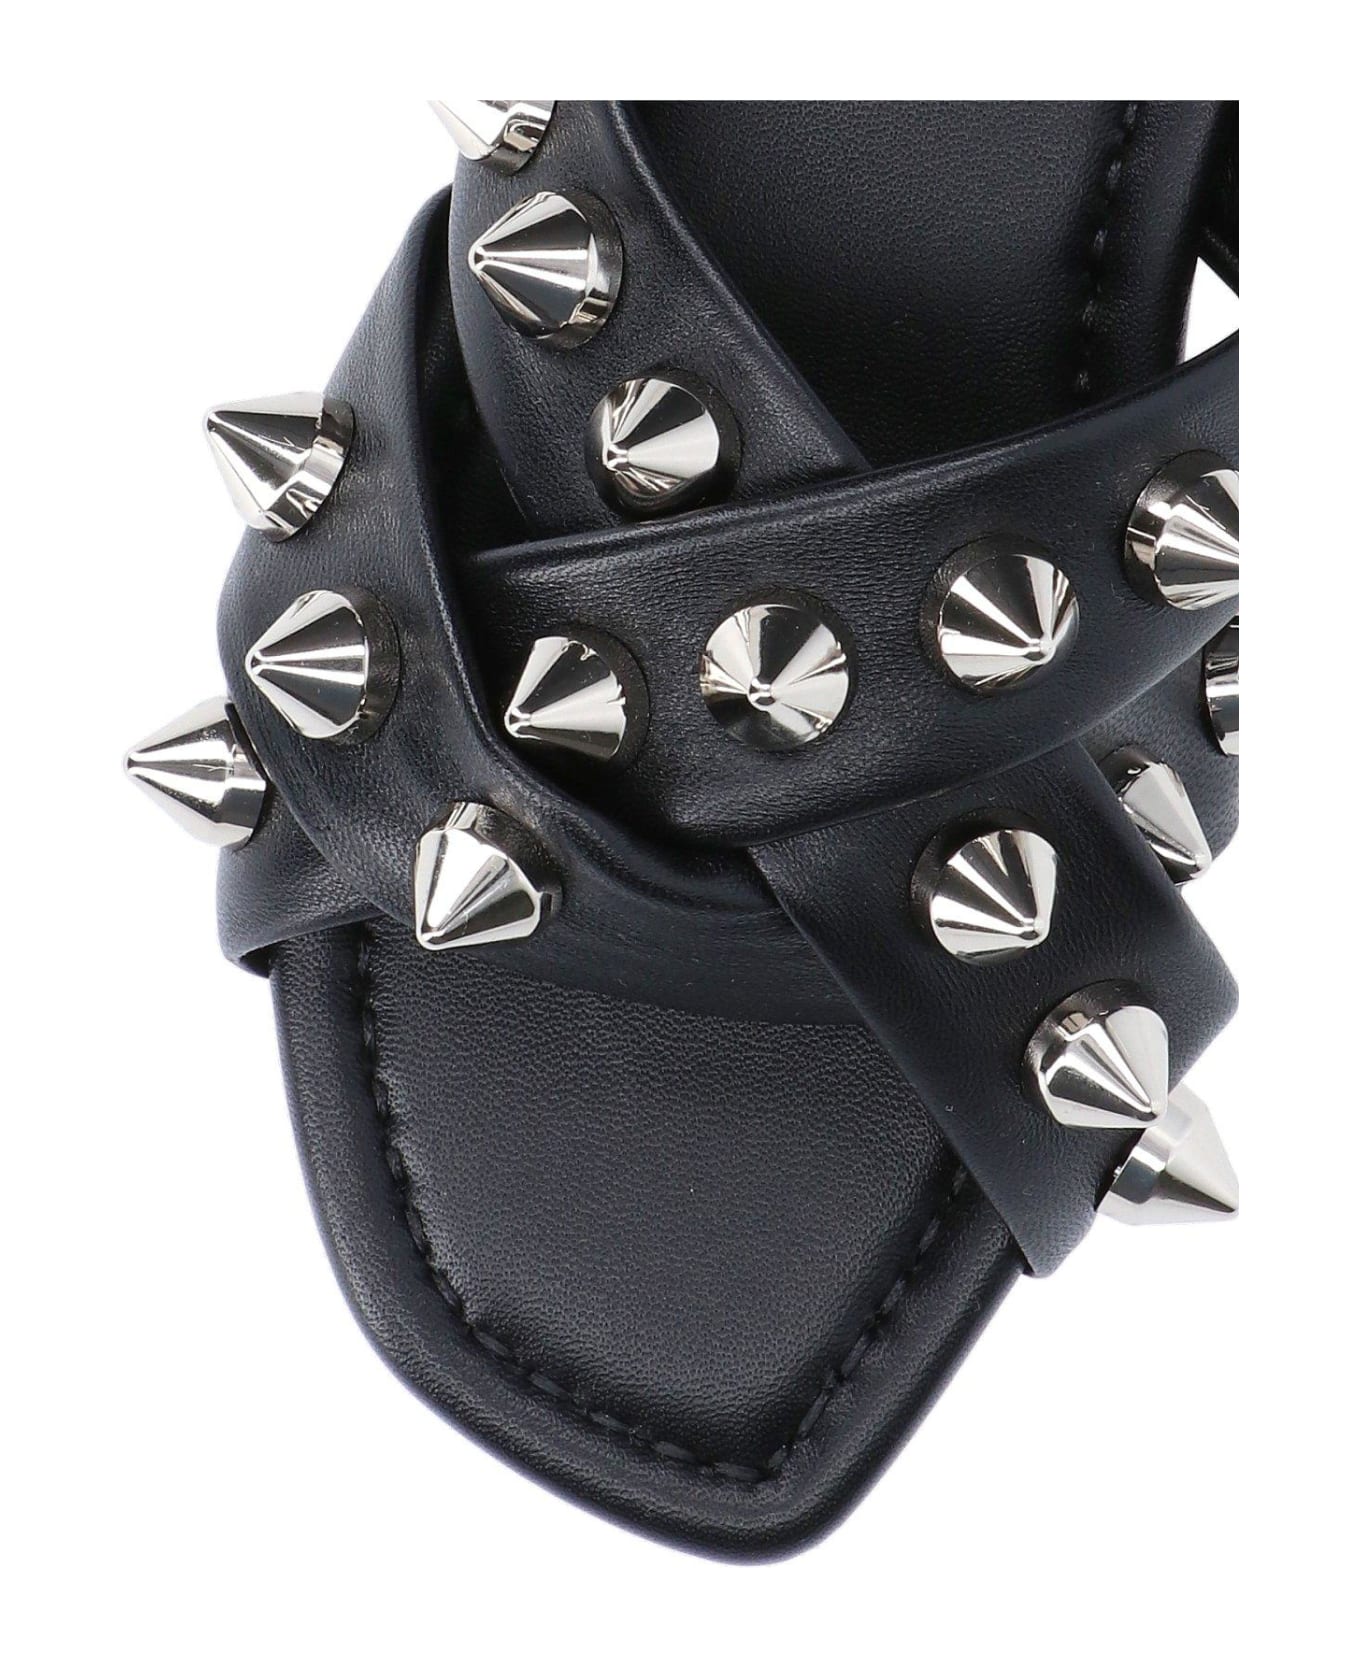 Christian Louboutin Stud Embellished Open Toe Sandals - Black